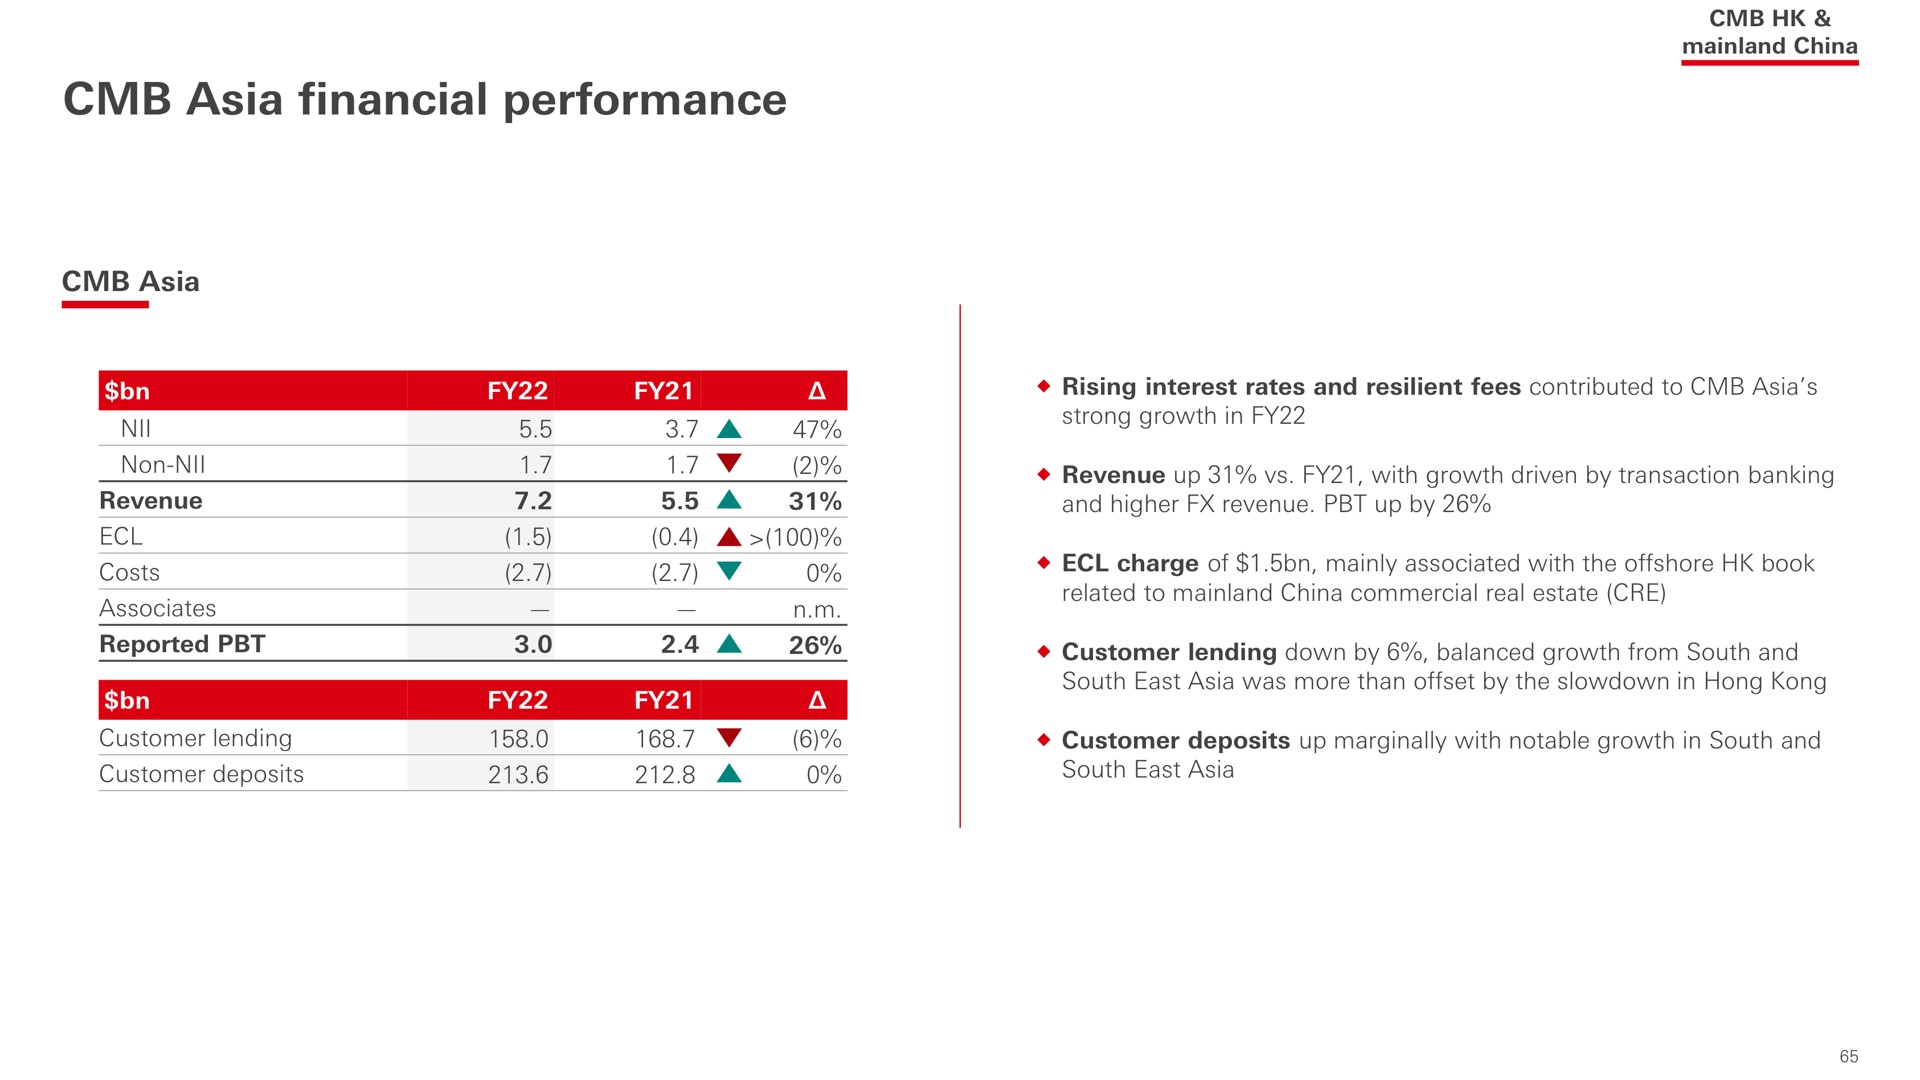 financial performance | HSBC